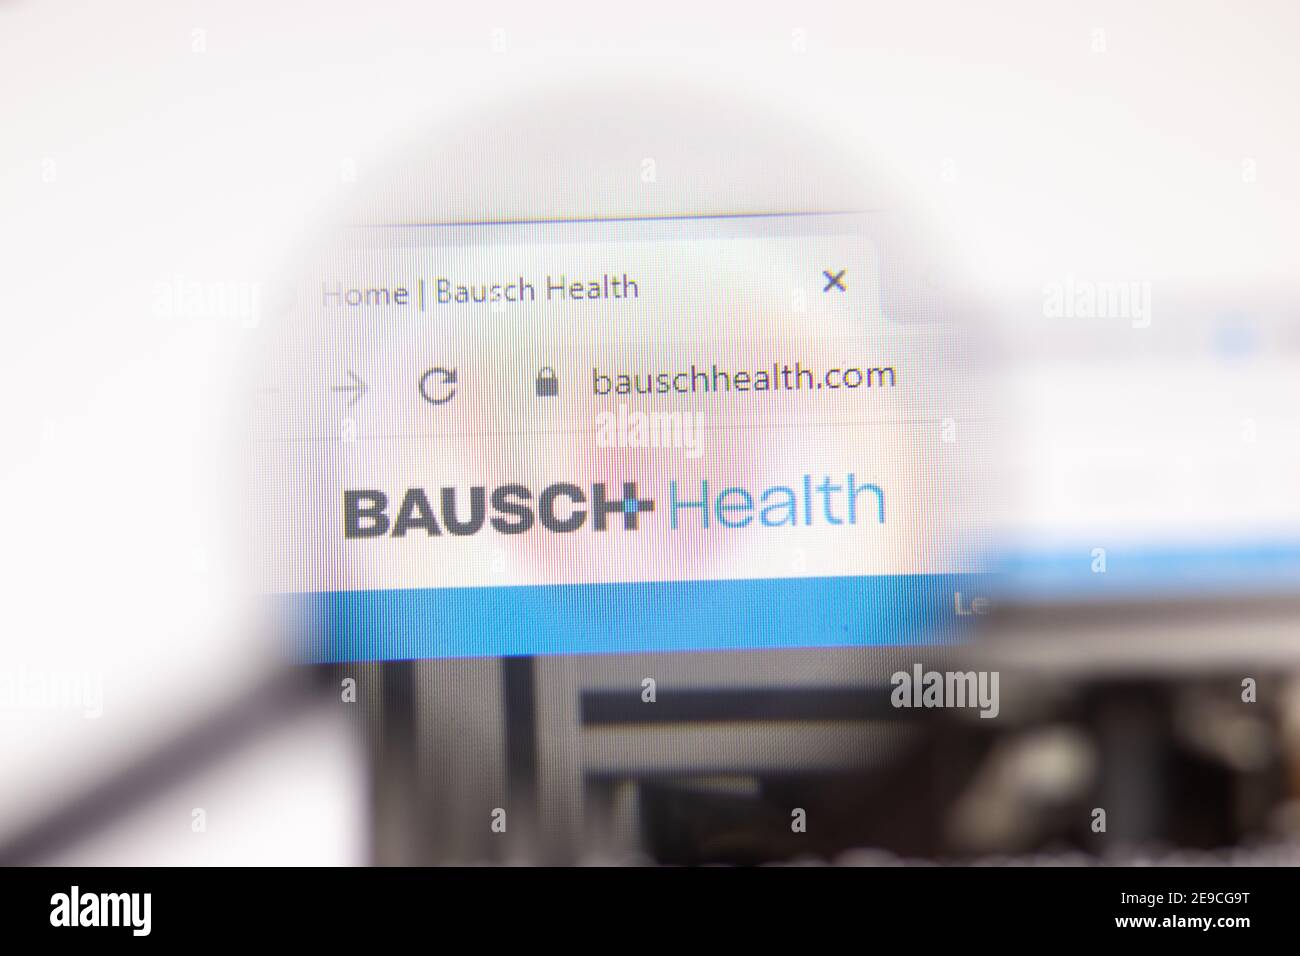 Los Angeles, USA - 1. Februar 2021: Bausch Health Webseite. BauschHealth.com Logo auf dem Display, illustrative Editorial Stockfoto